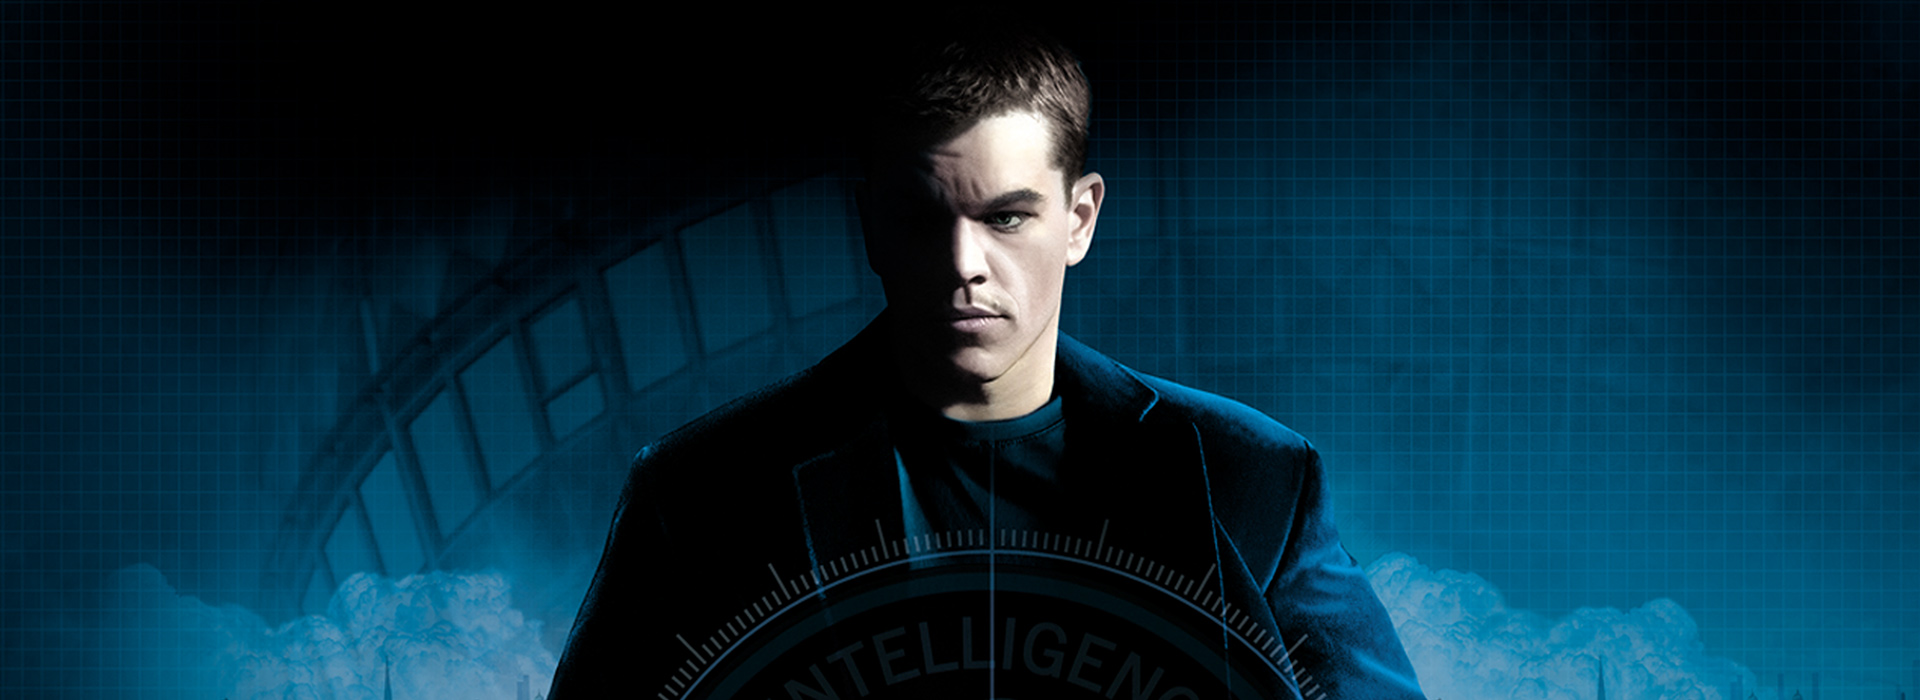 Movie poster The Bourne Supremacy